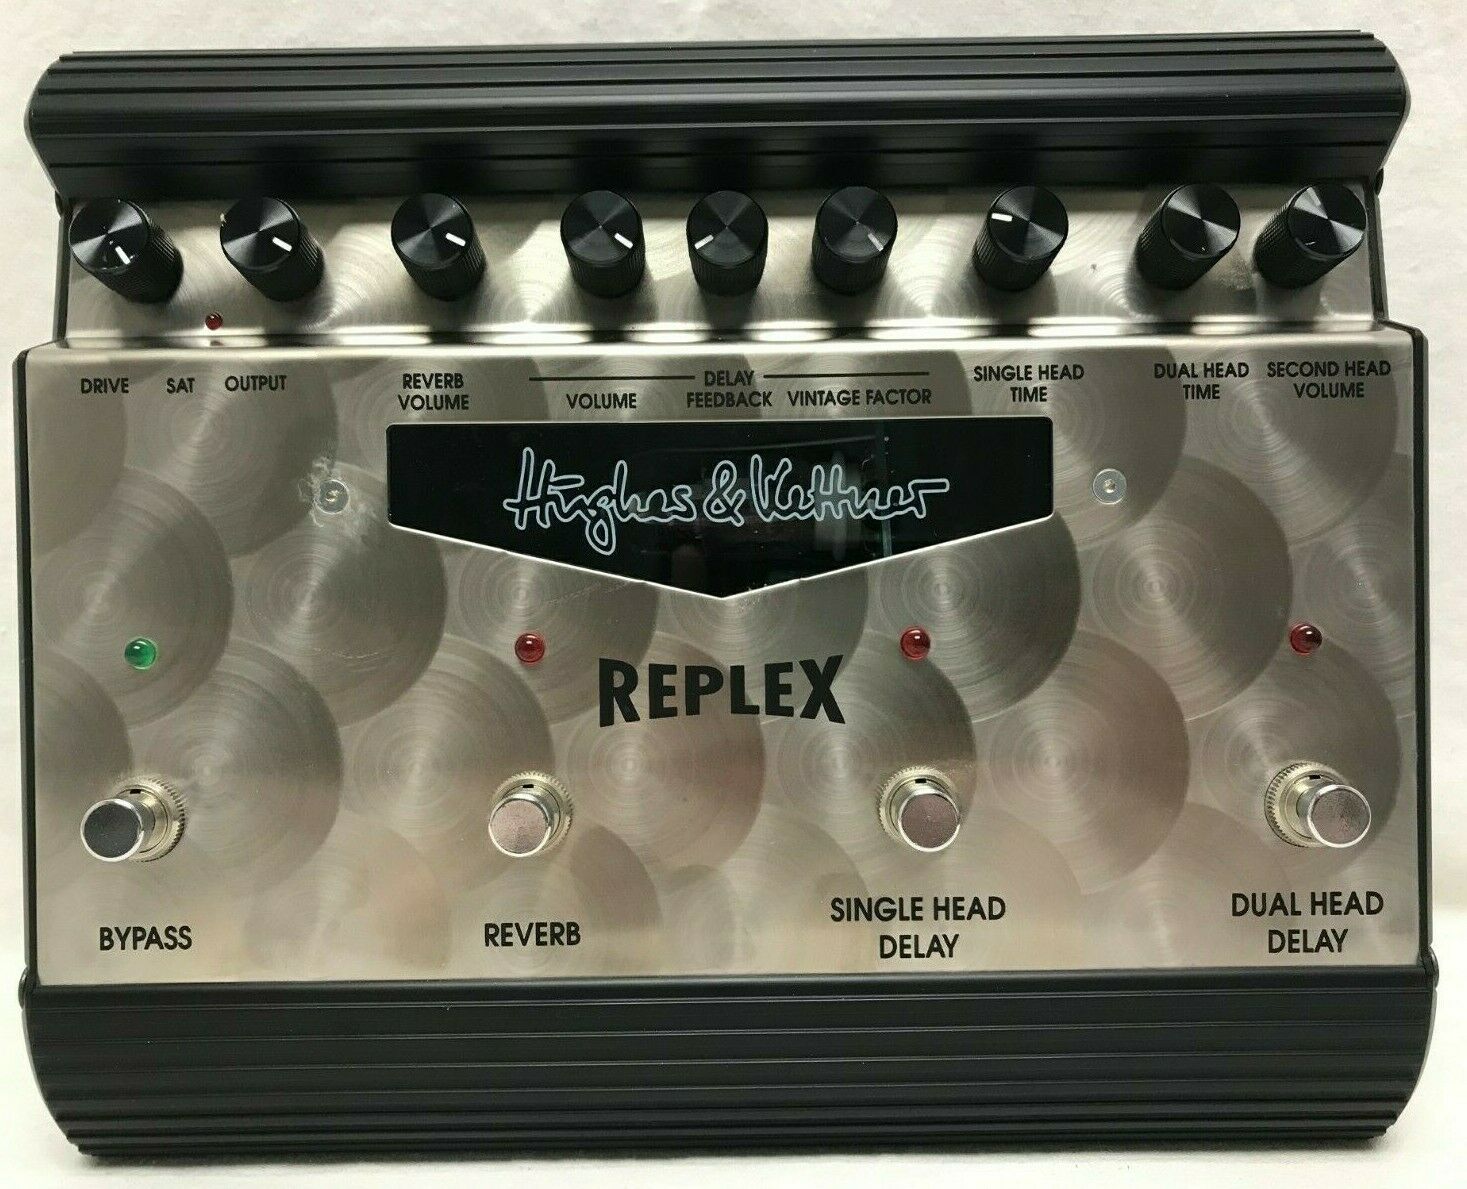 正規品販売! replex Supply hughes&kettner & - htii.edu.kz